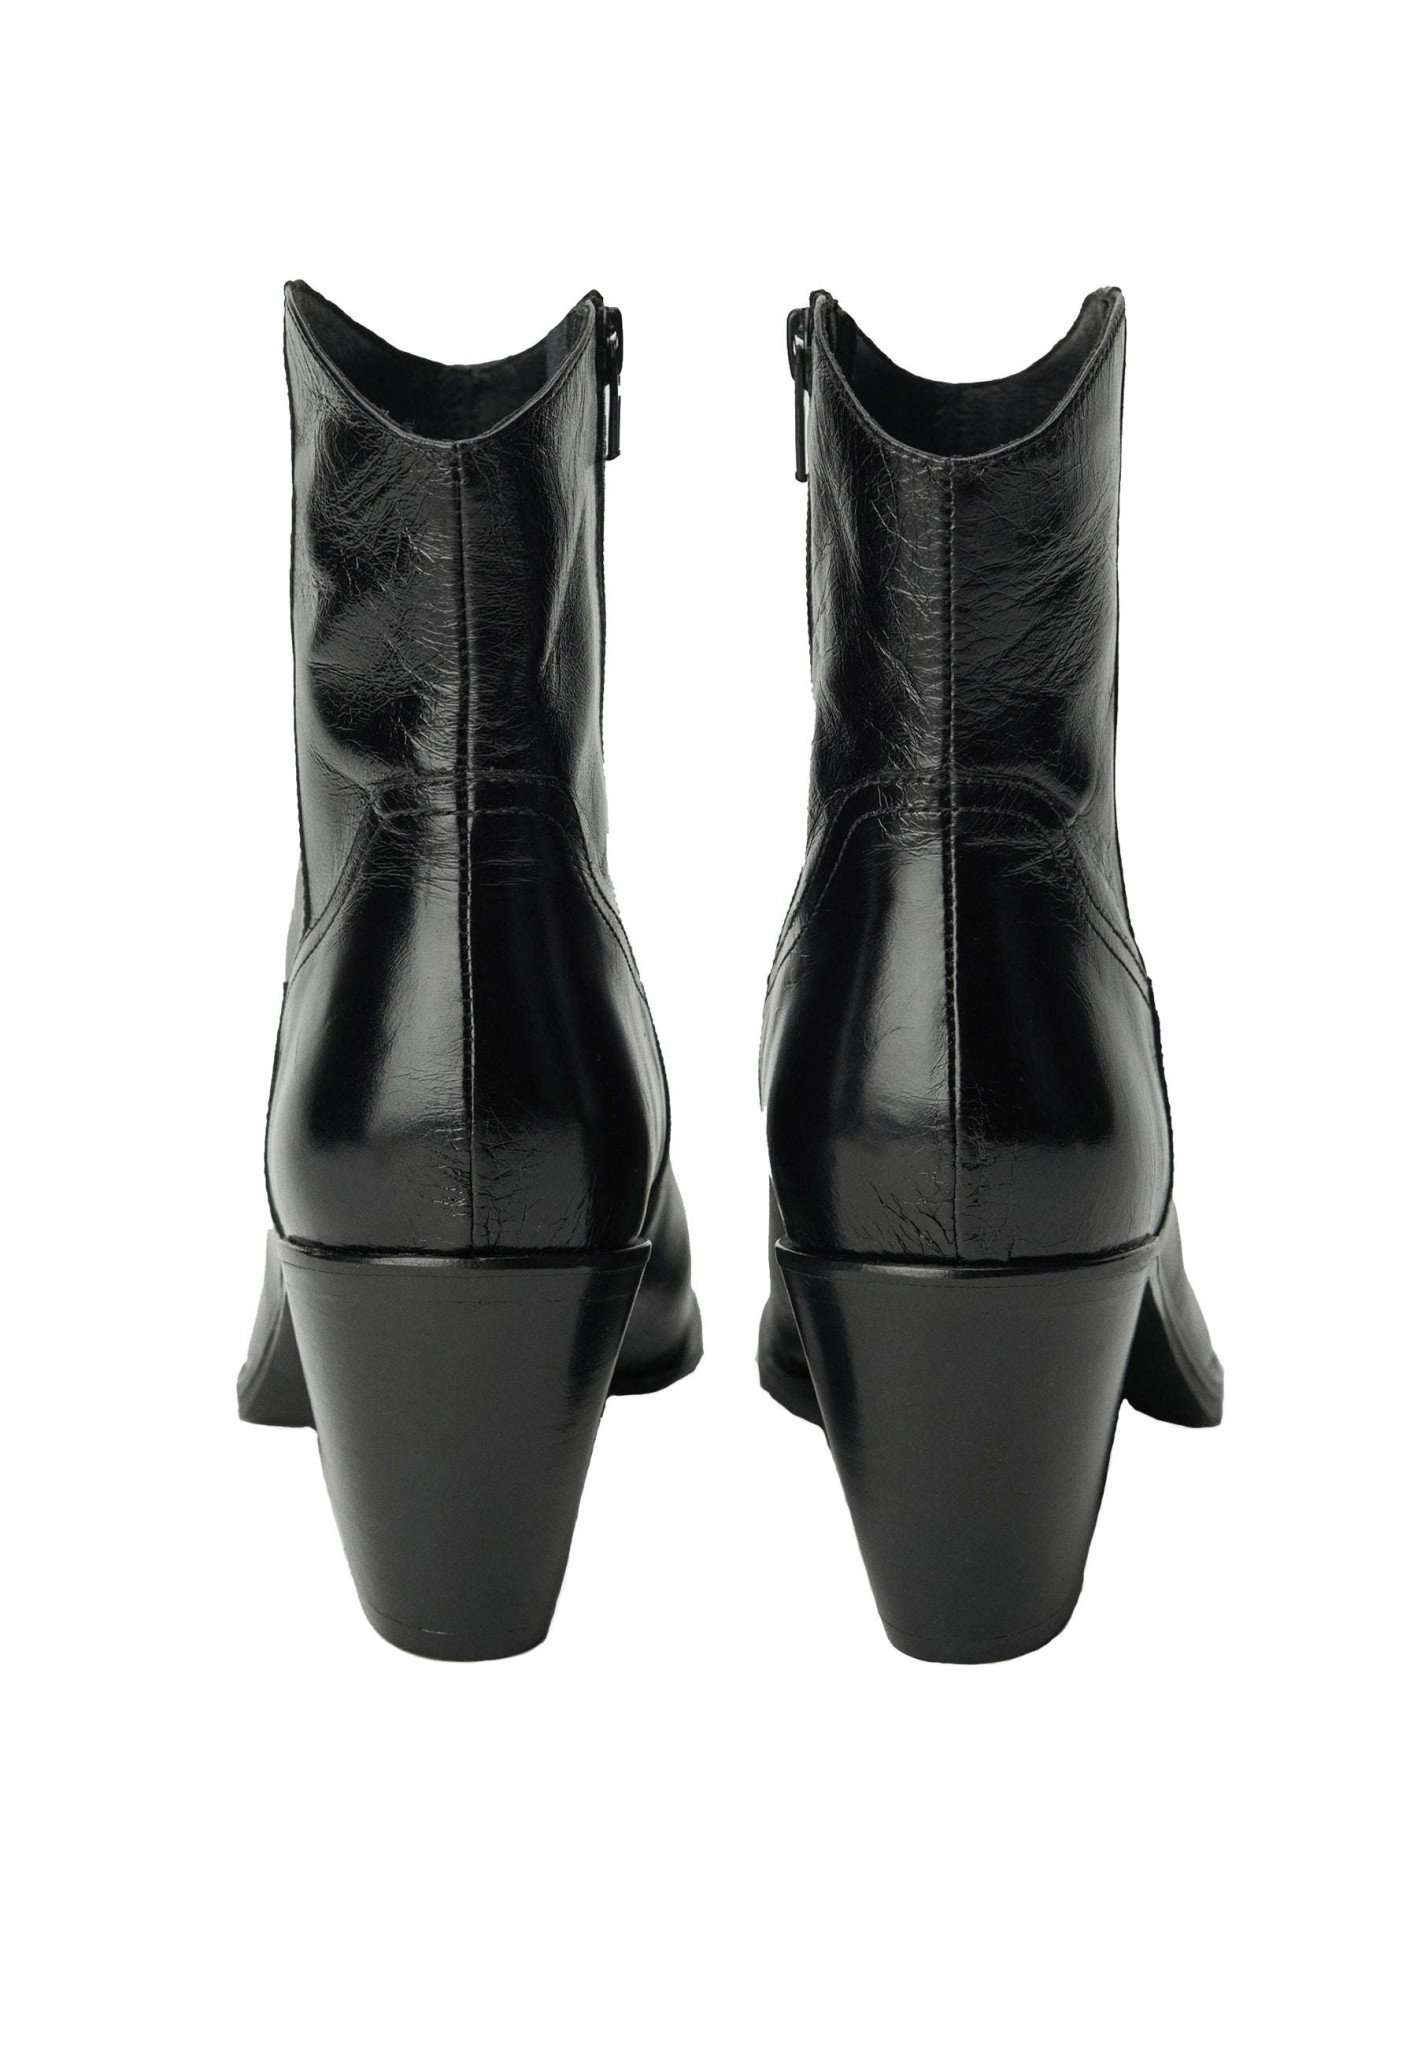 Premium Leather Cowboy Boots in Black Stiefeletten Salsa Jeans   